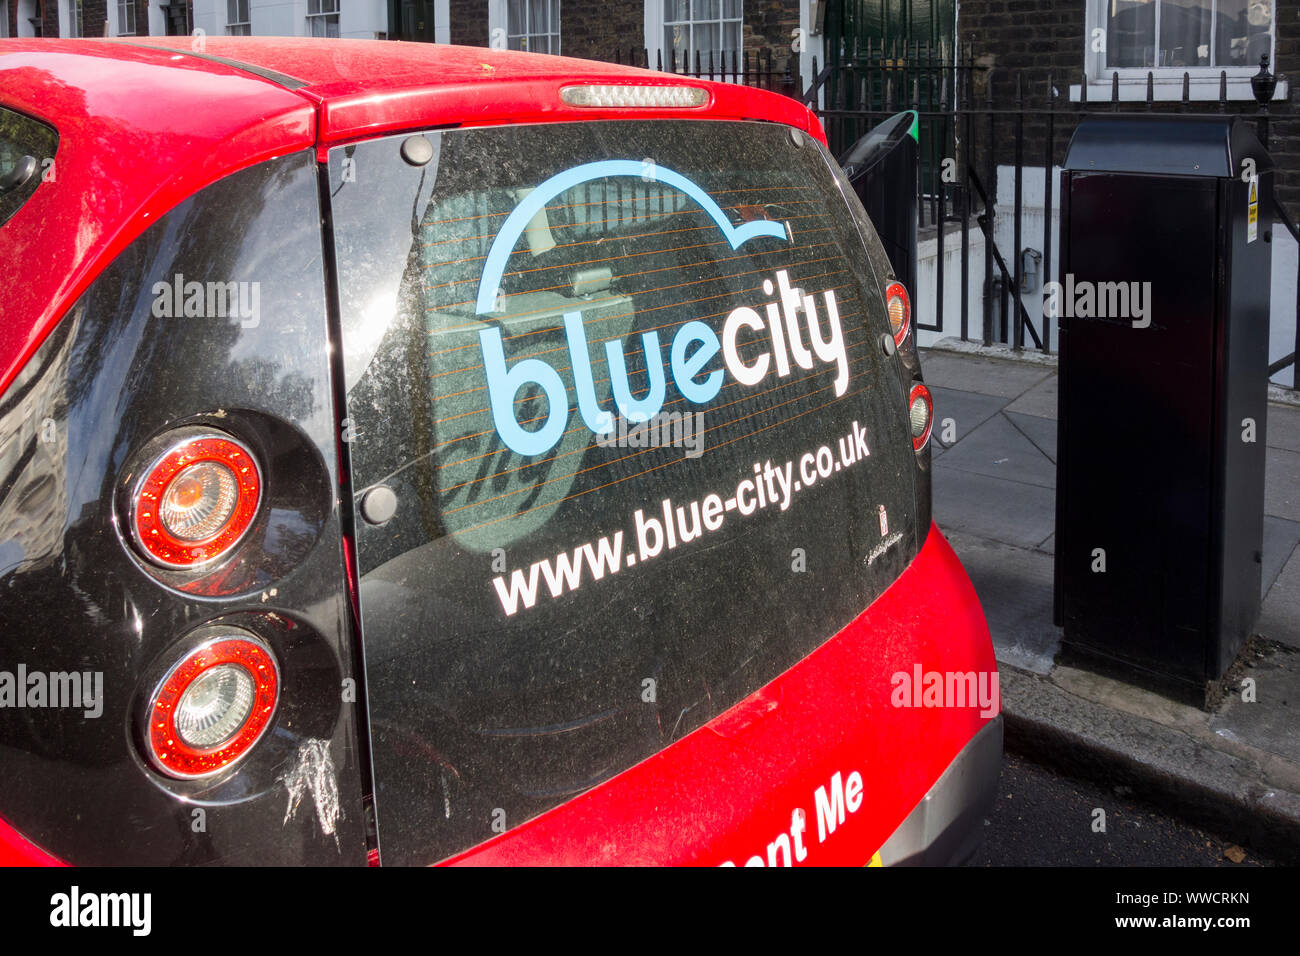 Bluecity electric car-sharing scheme, Bloomsbury, London, UK Stock Photo